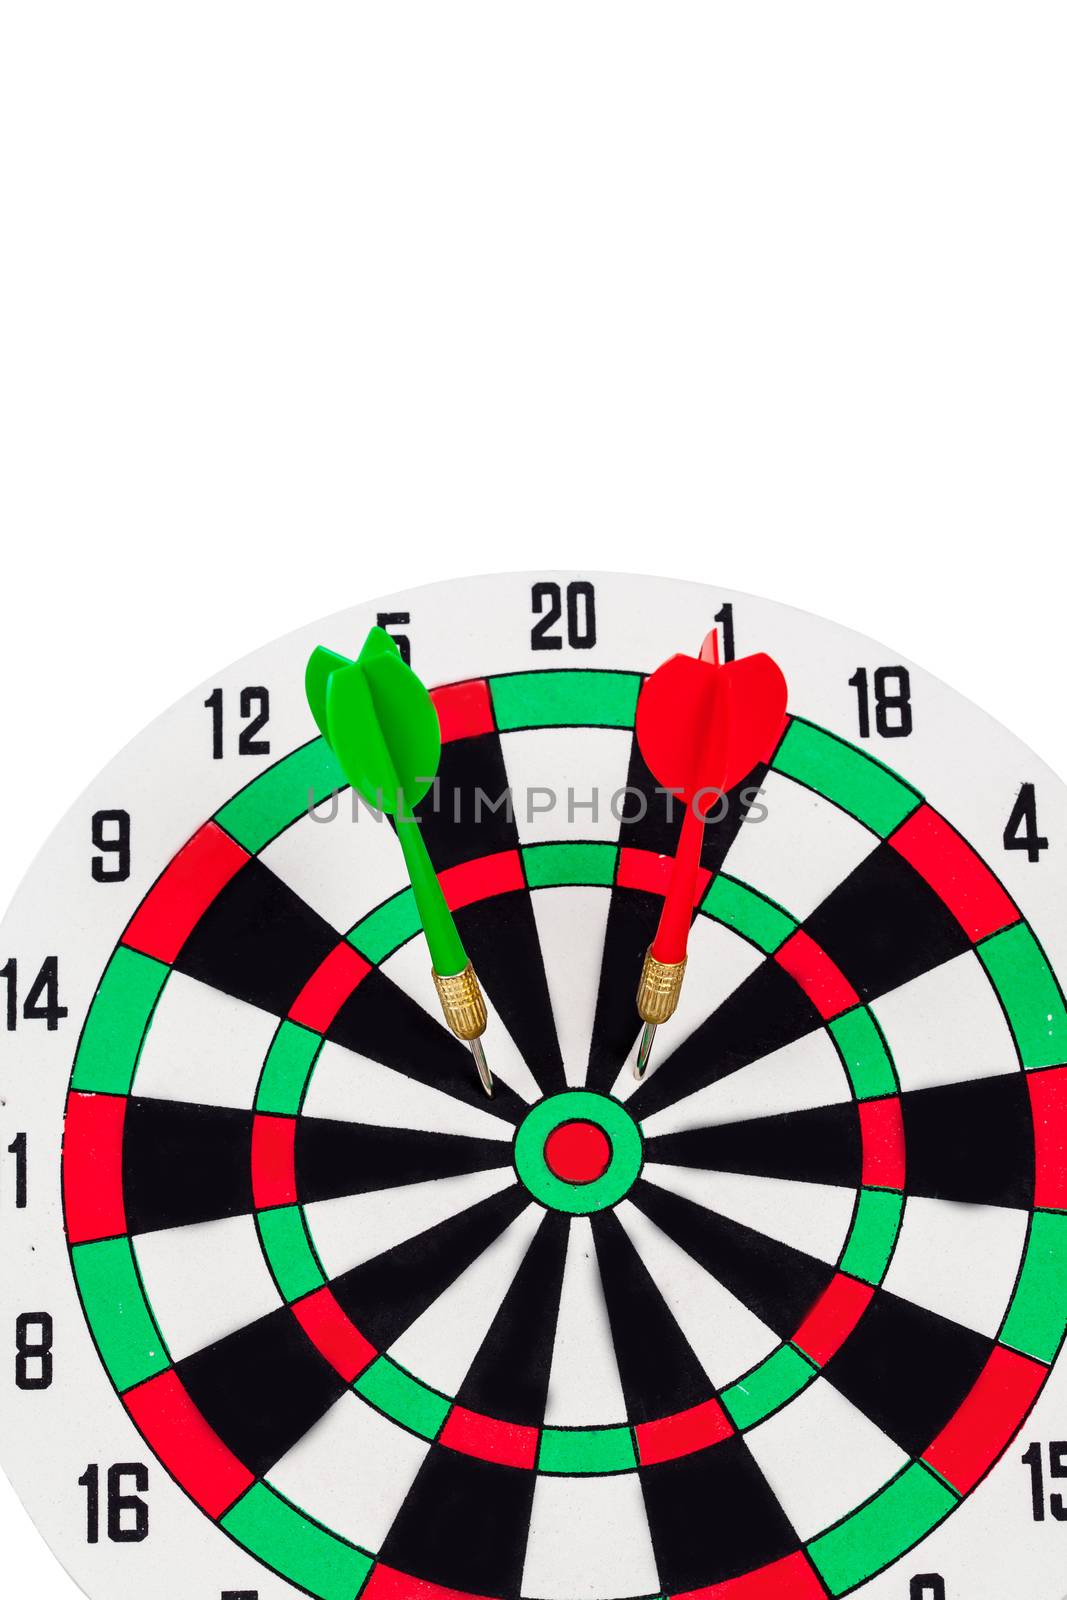 Dart arrow hitting in bullseye on dartboard